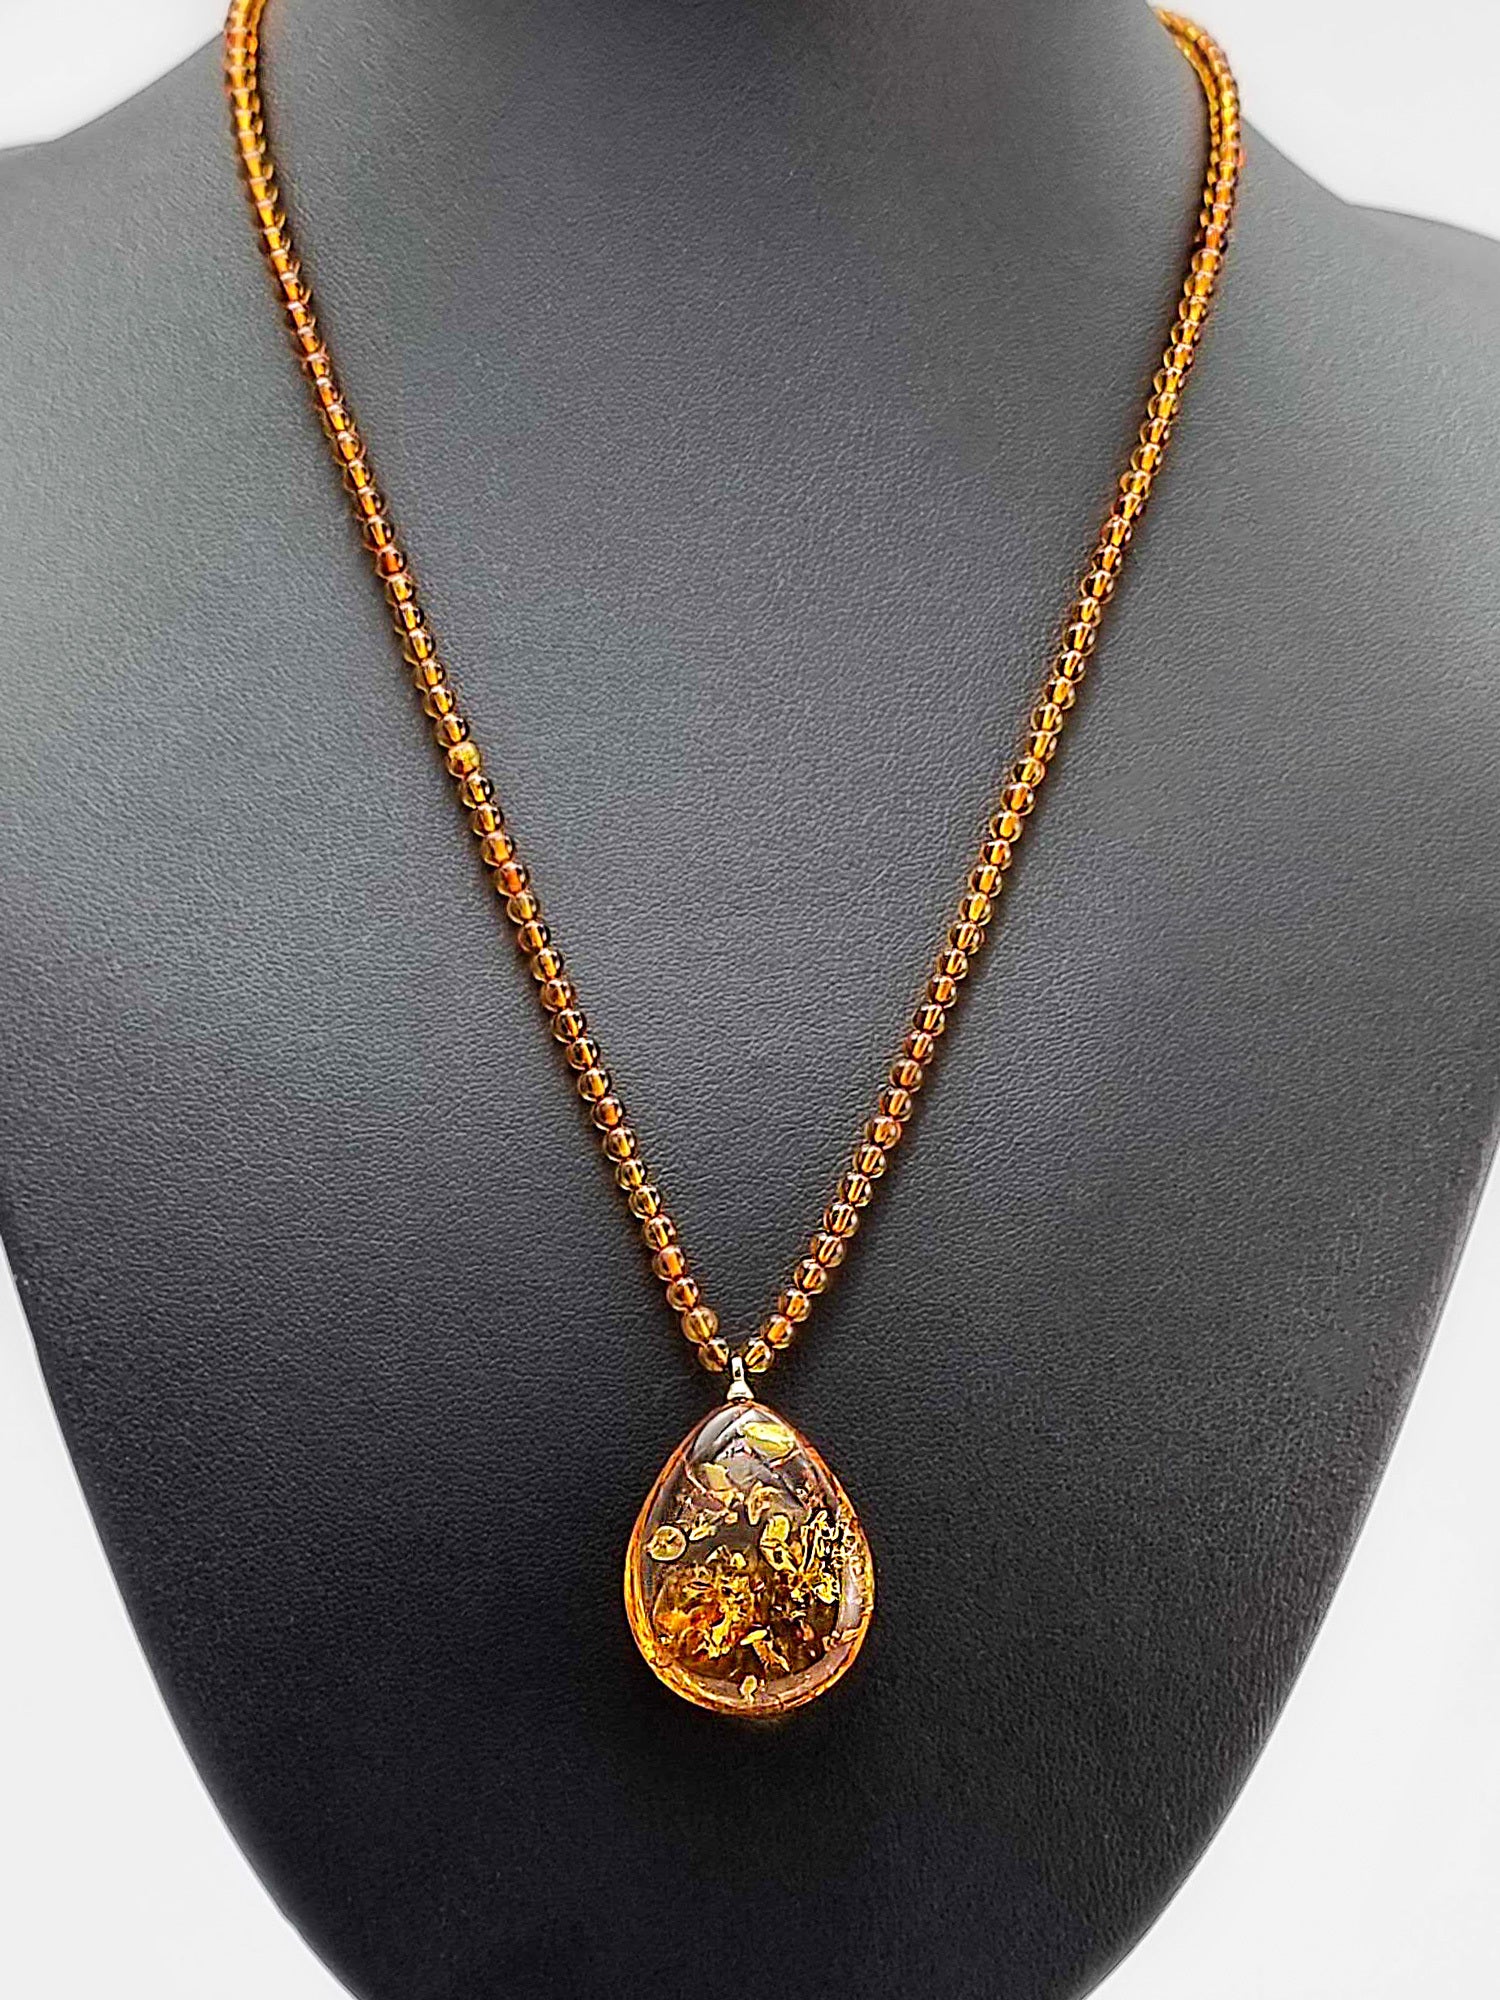 Cognac Amber Drop Pendant Beaded Necklace